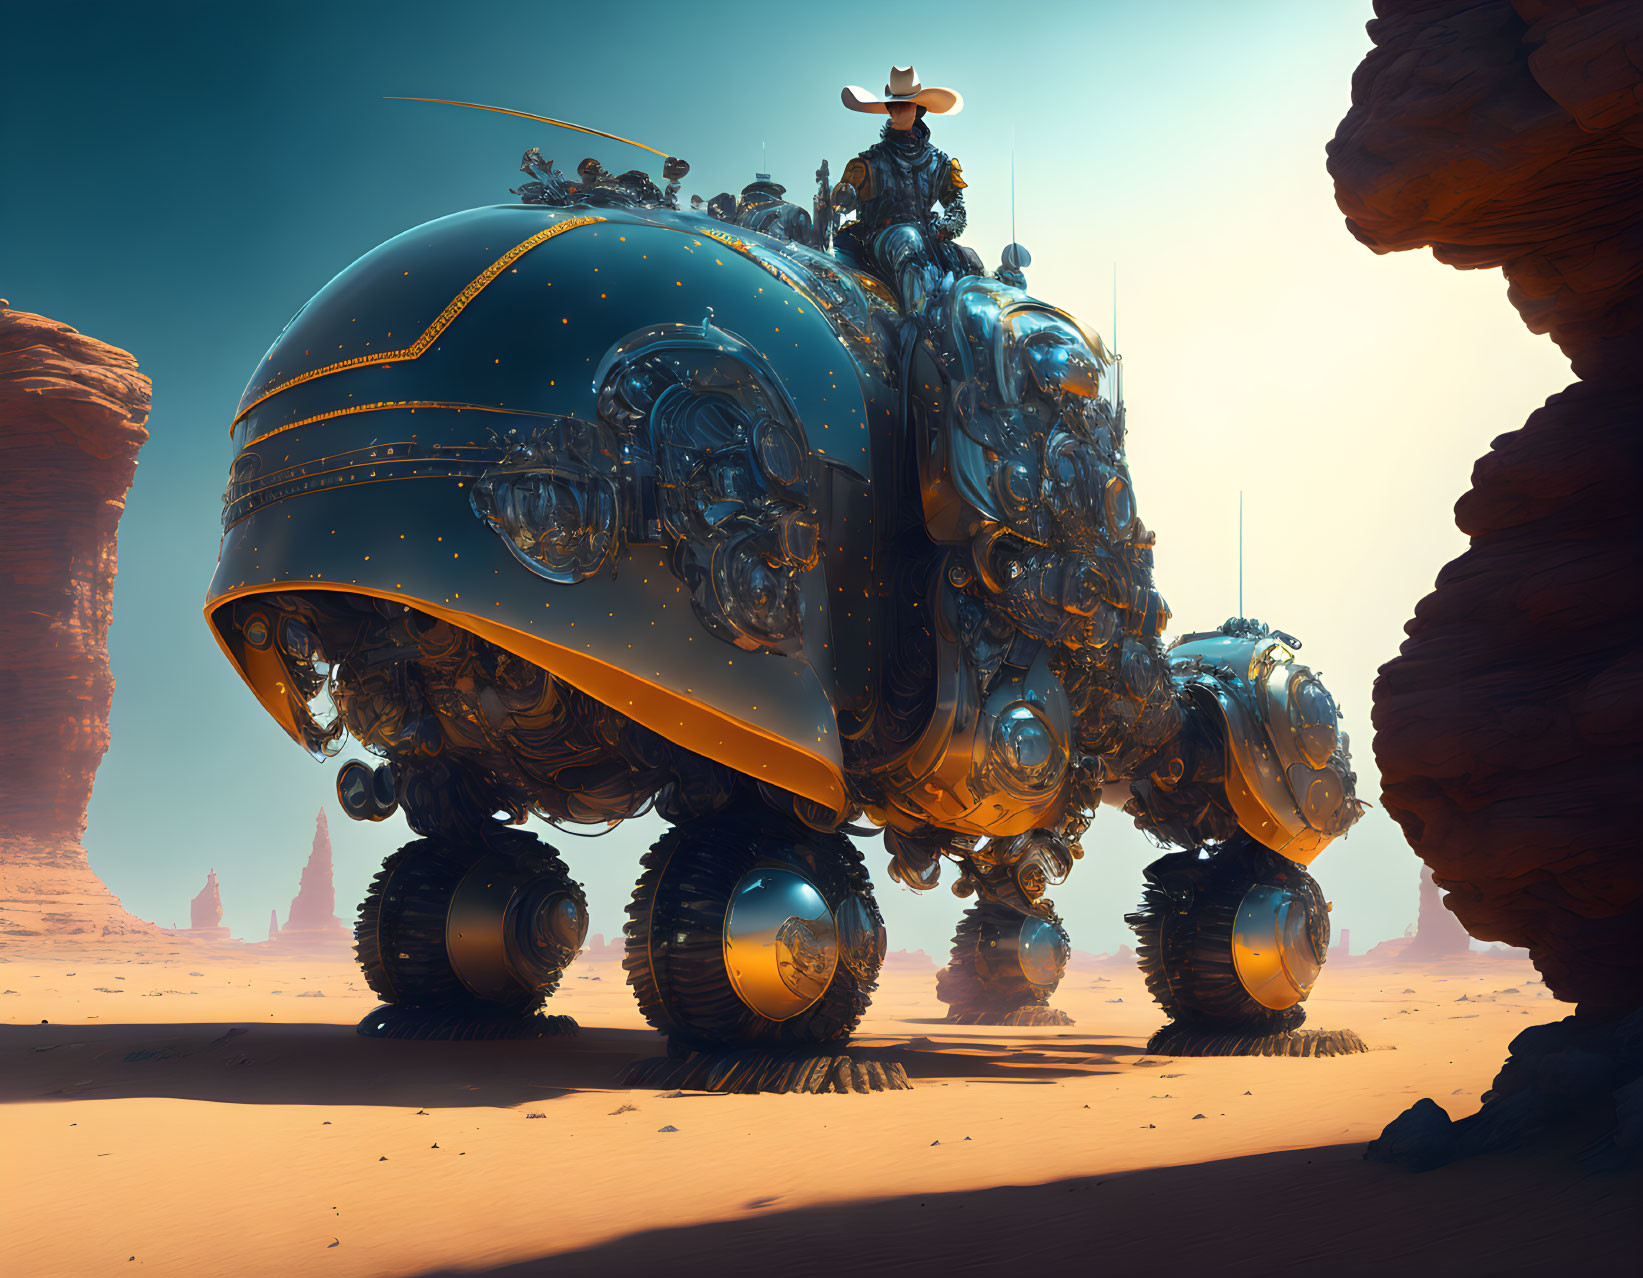 Futuristic cowboy on massive spherical vehicle in desert landscape